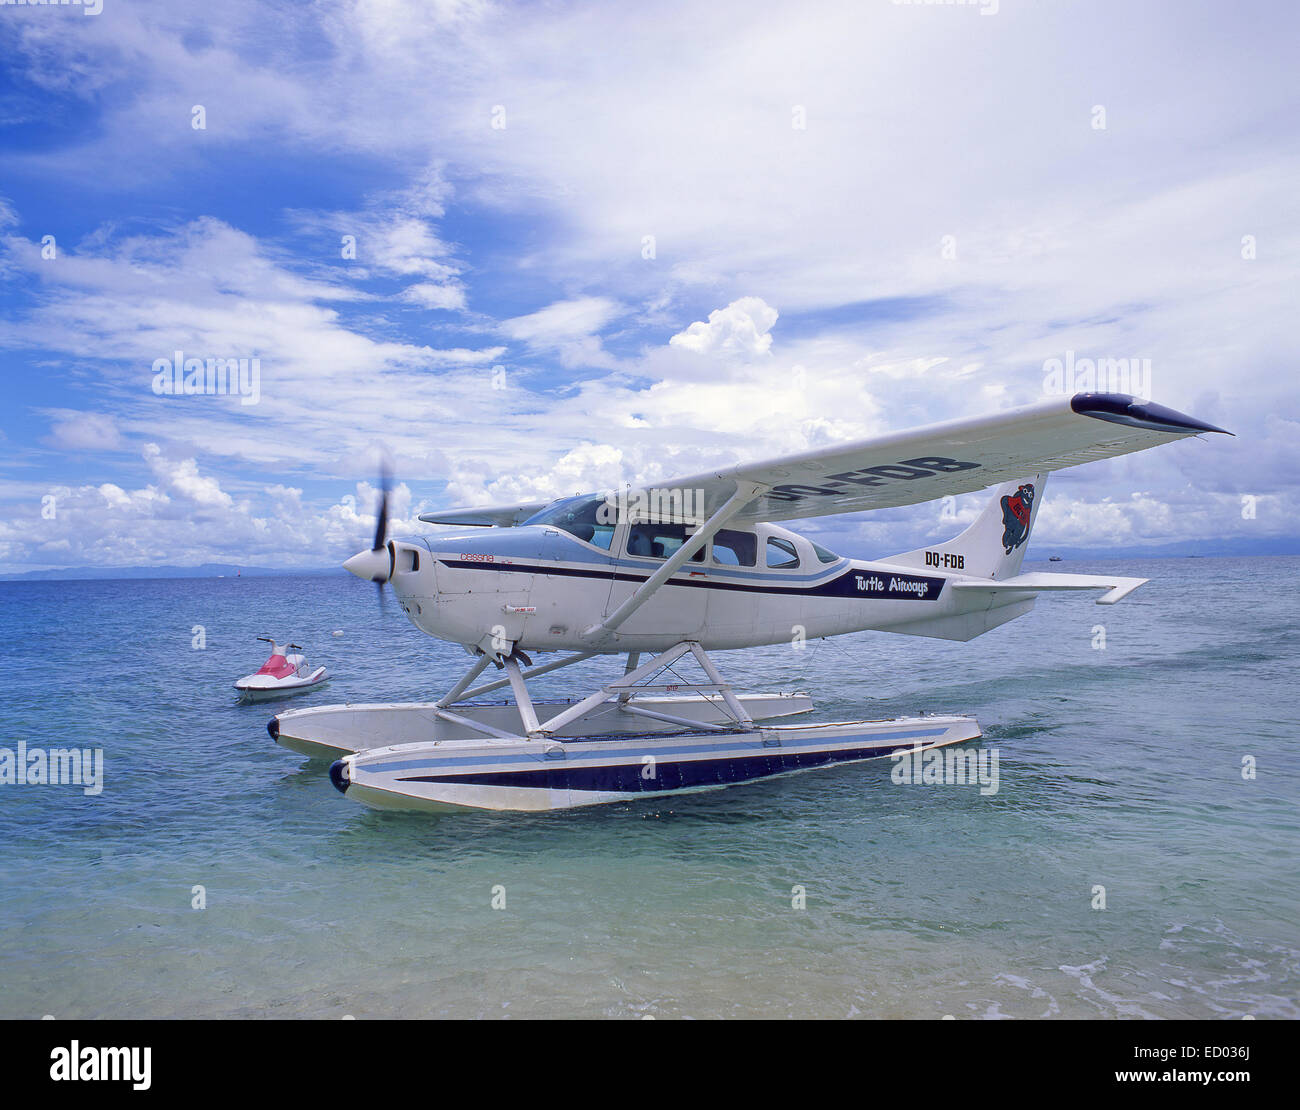 Schildkröte Airways Schwimmer Flugzeug, Beachcomber Island Resort Beachcomber Island, Mamanuca Inseln, Viti Levu, Republik Fidschi-Inseln Stockfoto